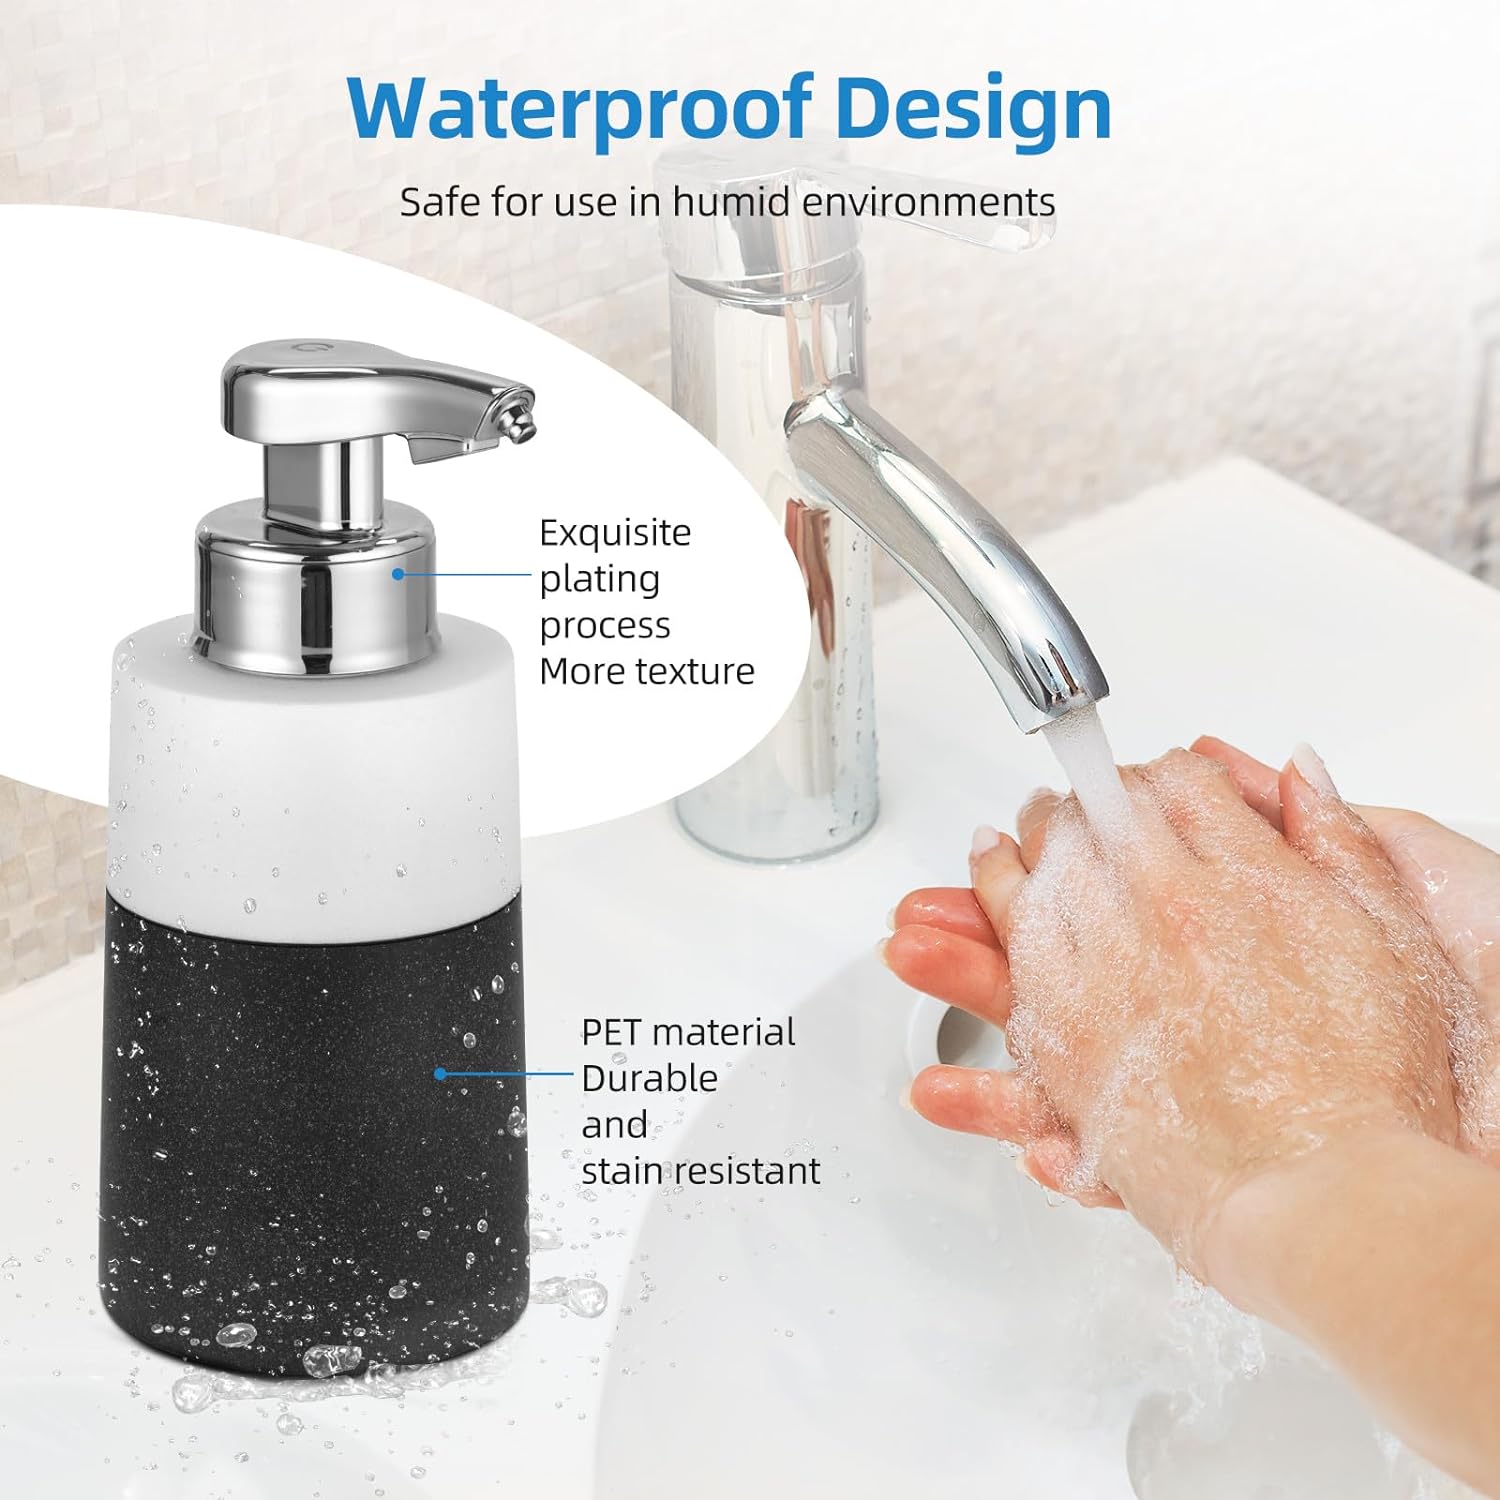 Automatic Soap Dispenser Touchless: 10oz Liquid Soap Dispenser, Hand Free Soap Dispenser Rechargeable Soap Dispenser, for Bathroom, Kitchen, Hotel